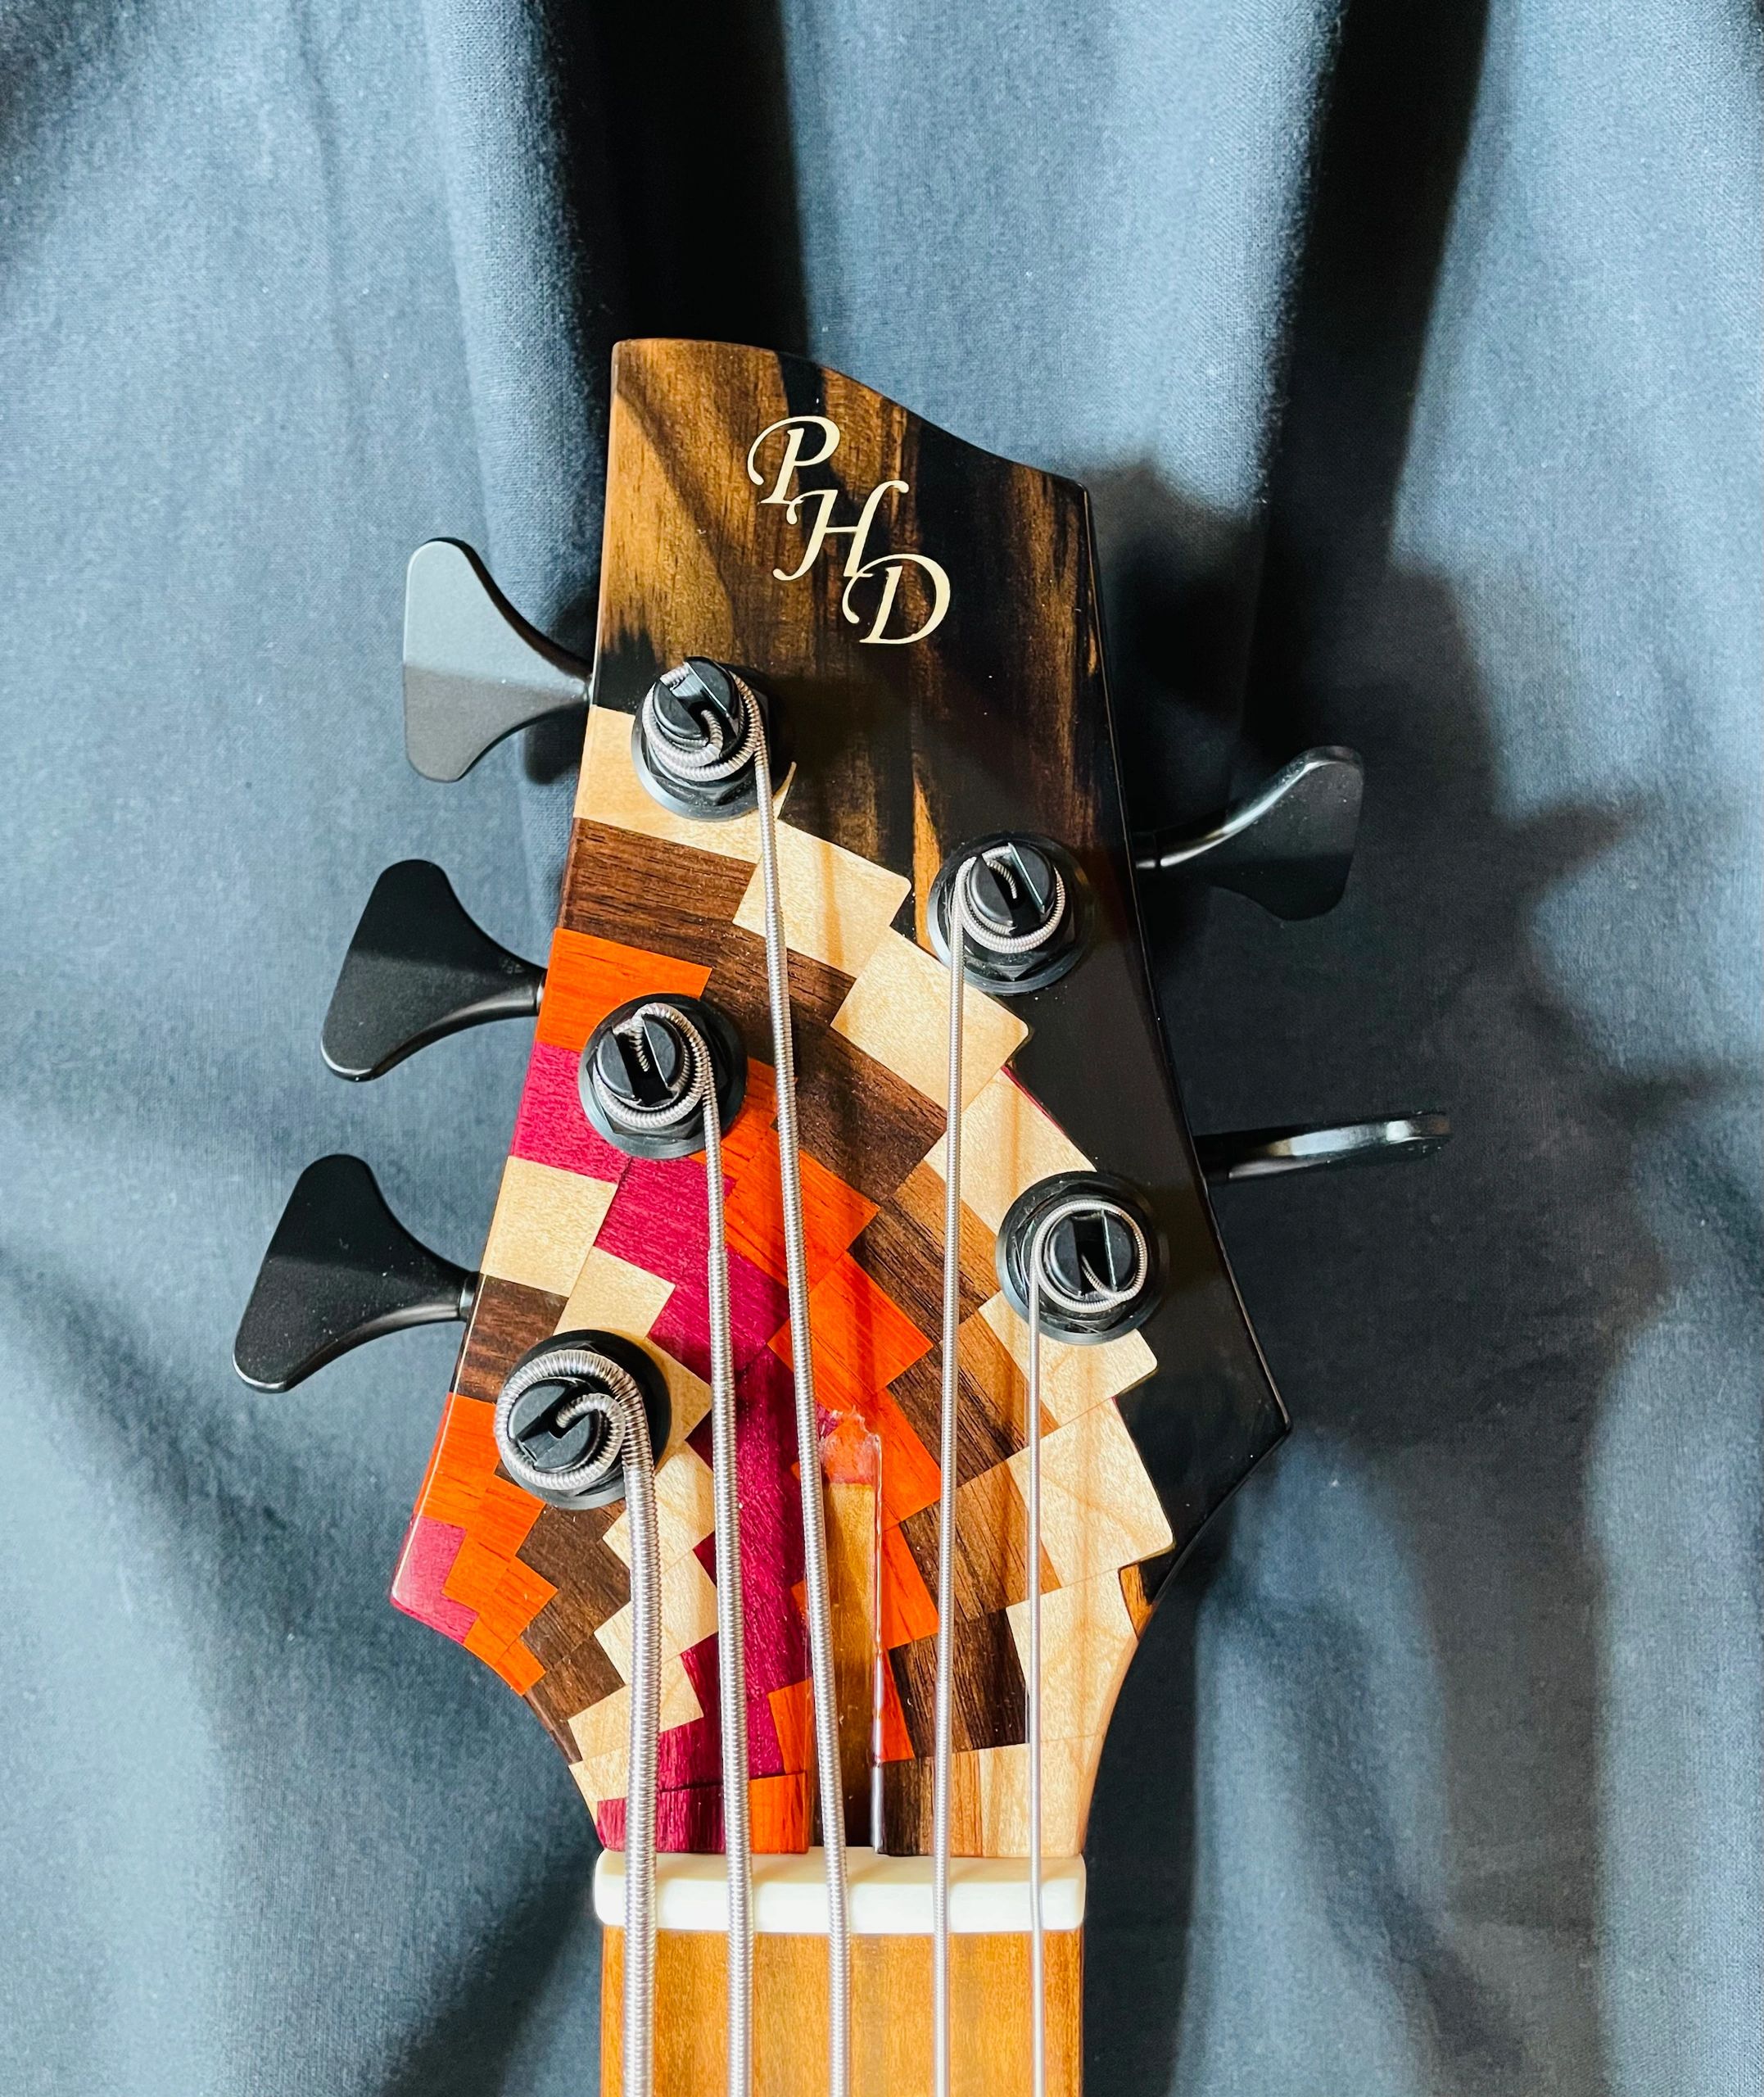 PHD Bass Guitars - Builder of Custom Electric Bass Guitars